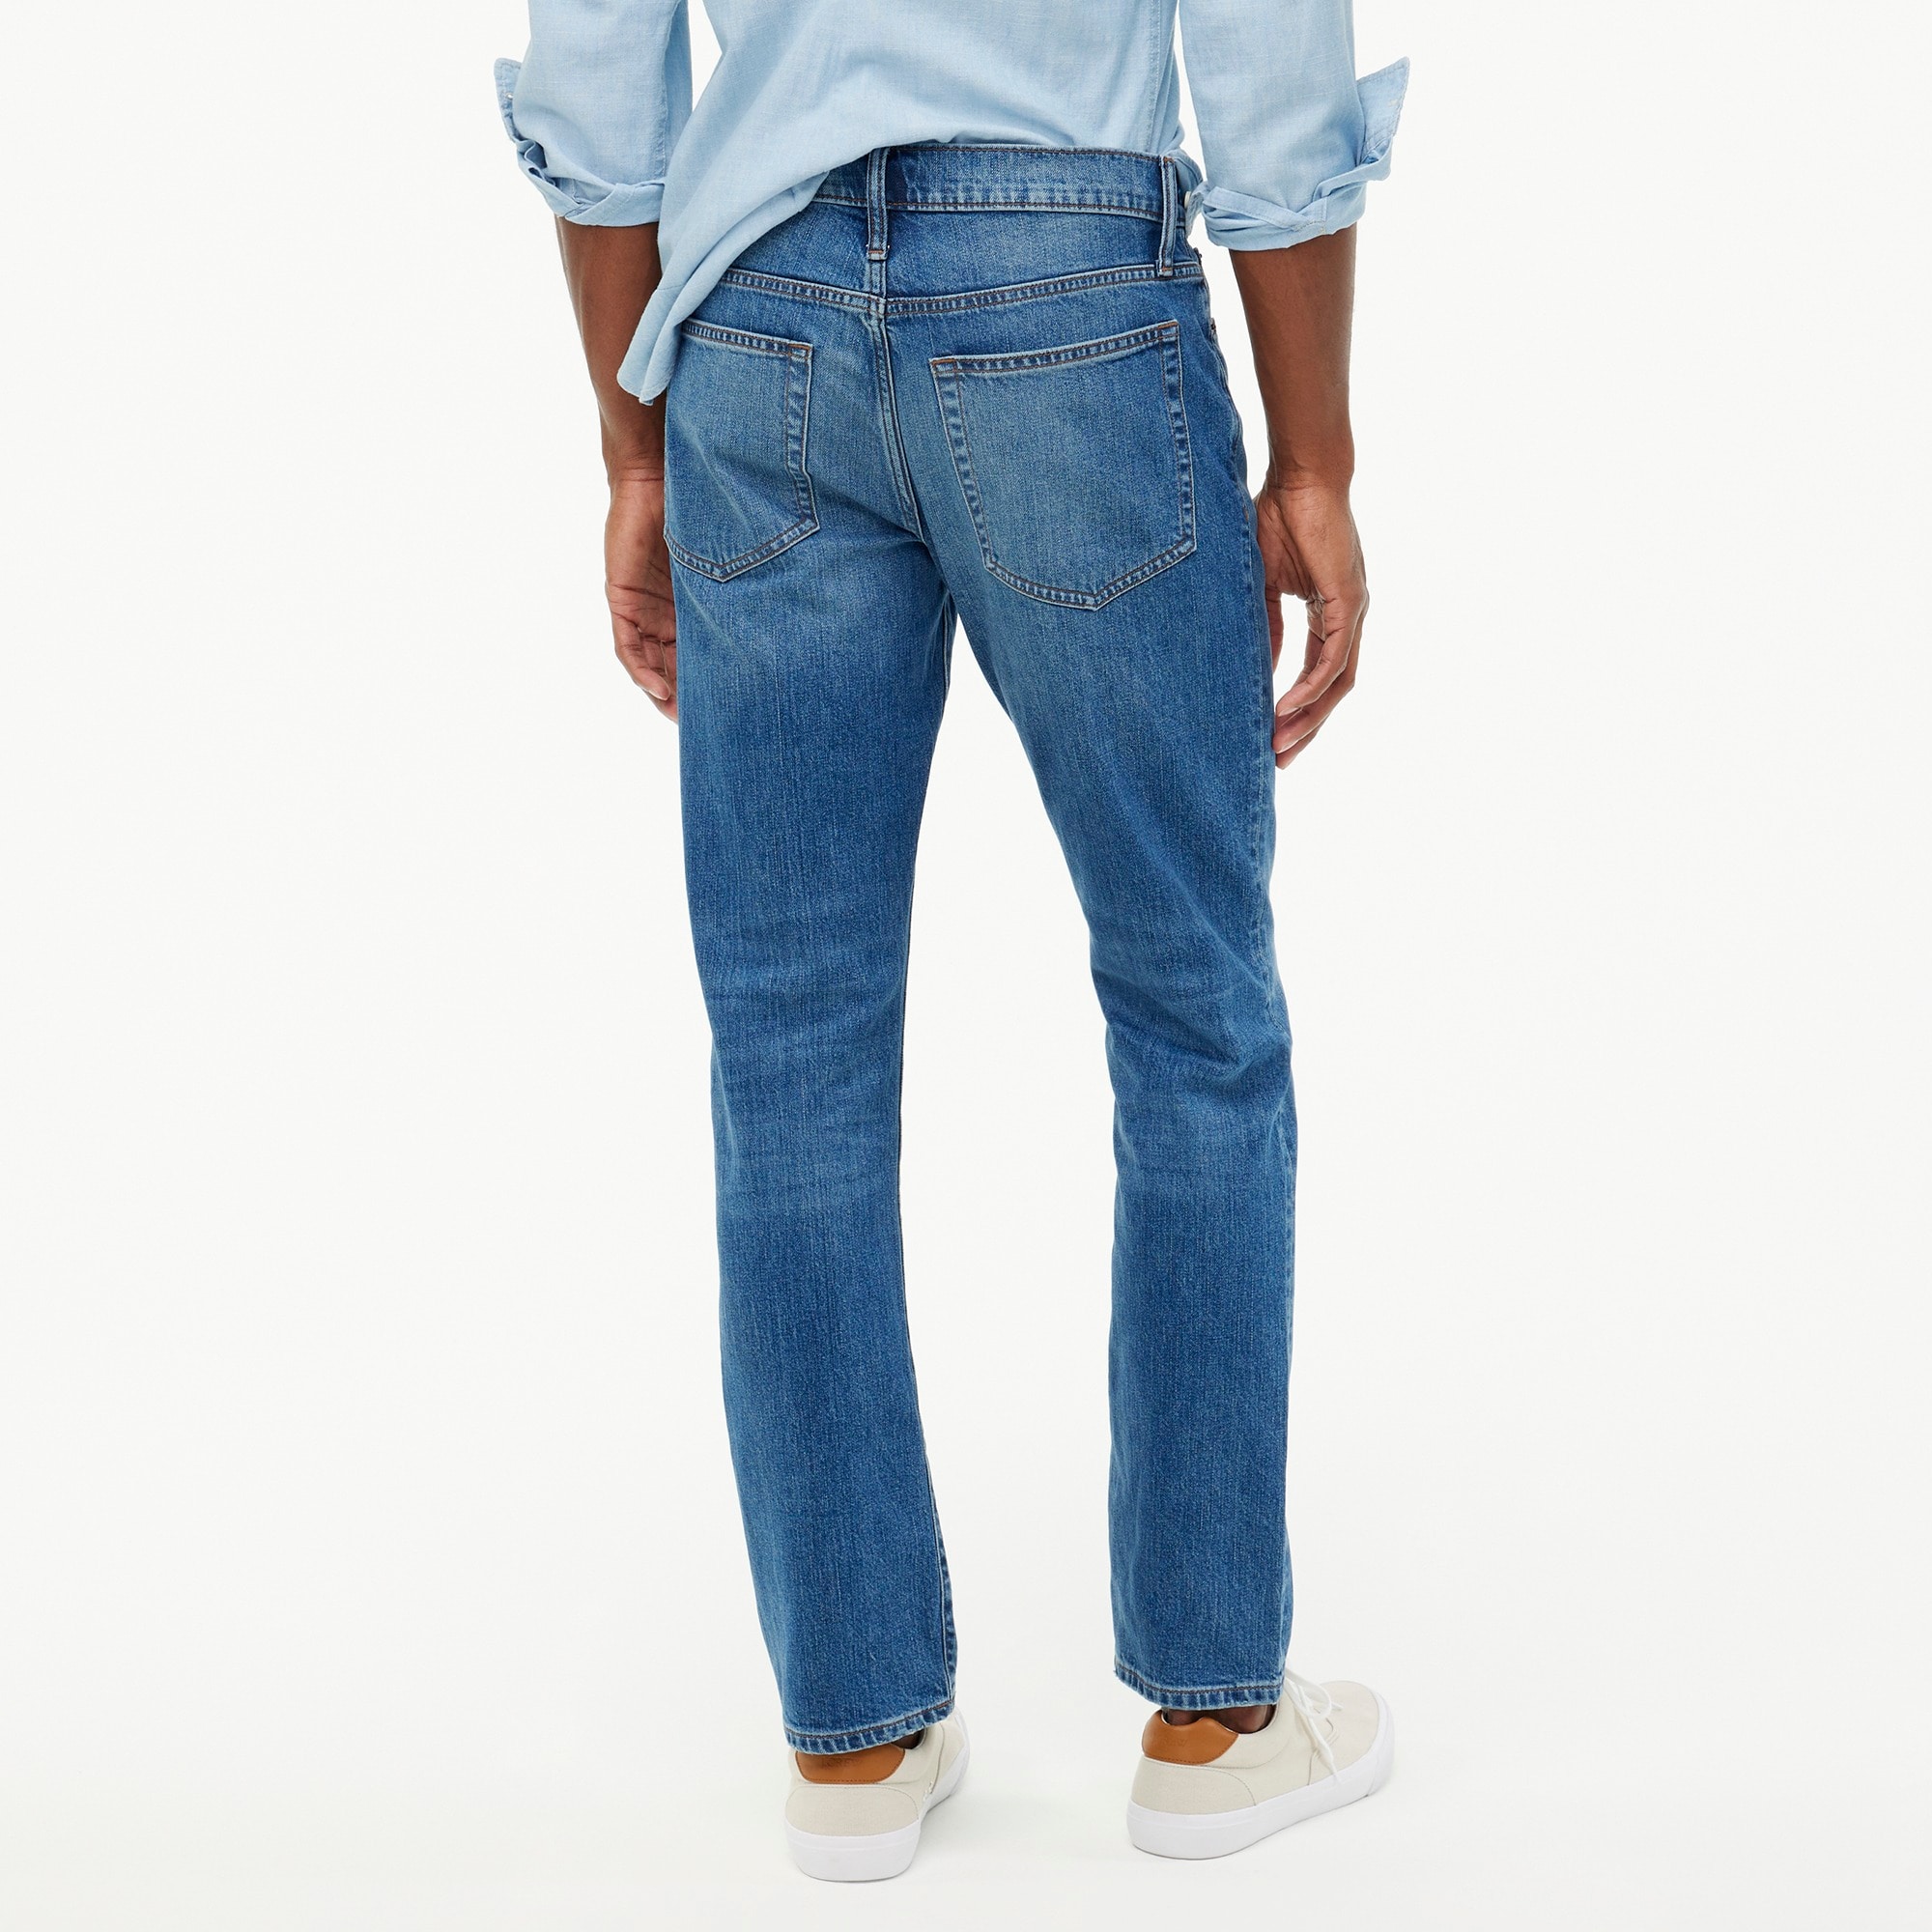 Straight-fit jean